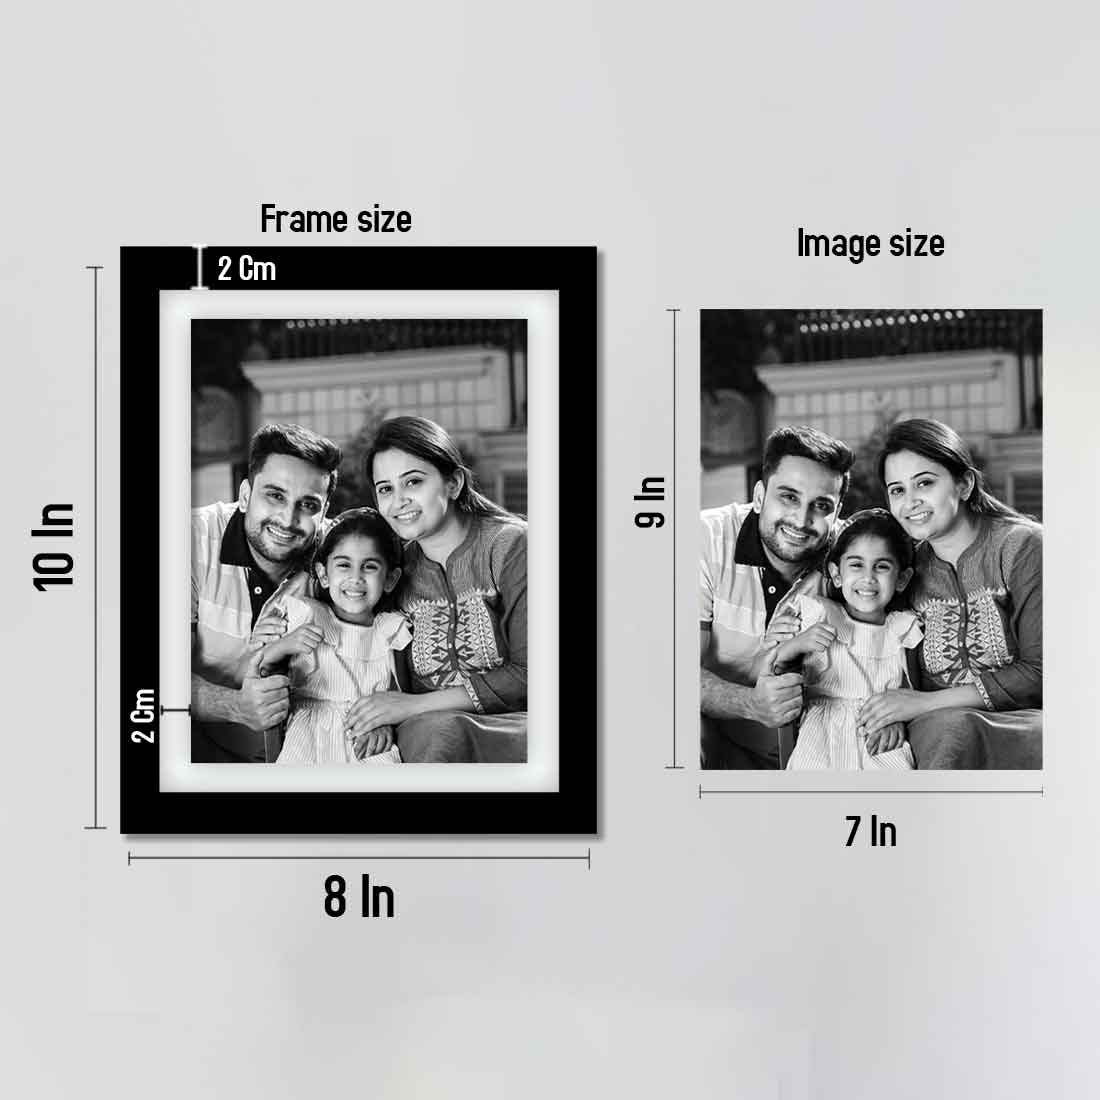 Photo Frame Wall Decor Customized Black and White 8x10 inch Photo Frame (Set of 6)